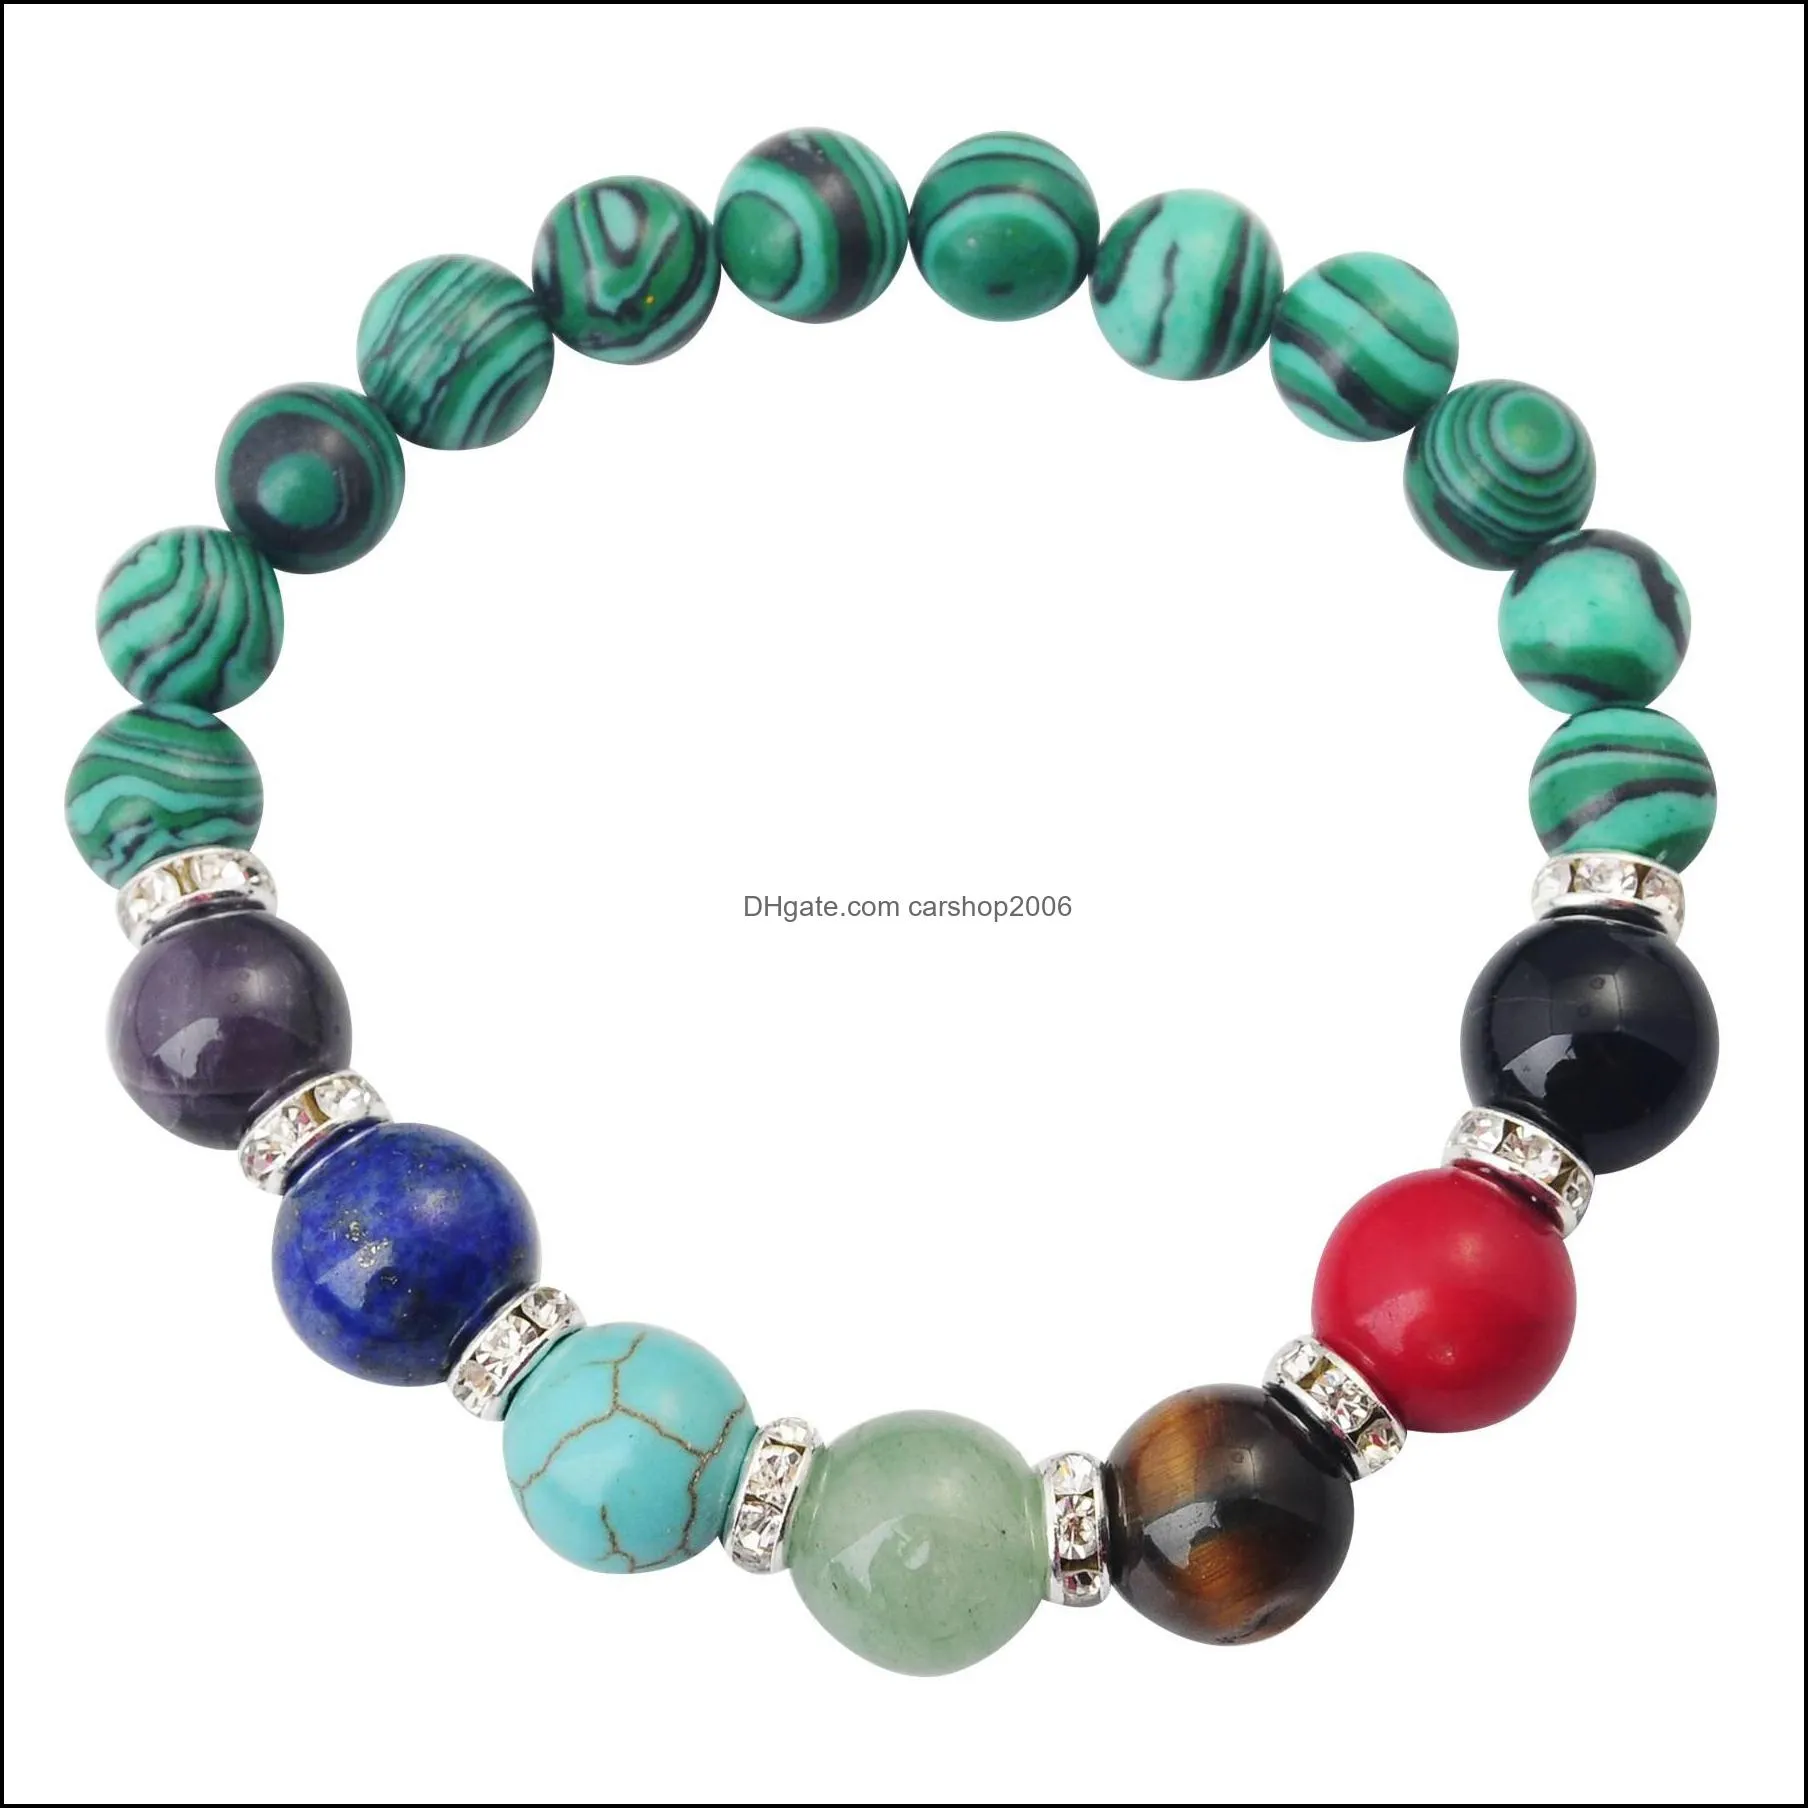 joya gift magnetic hematite 8mm round beads strands stone bracelets 7 chakra gemstone crystal healing reiki women jewelry bangle